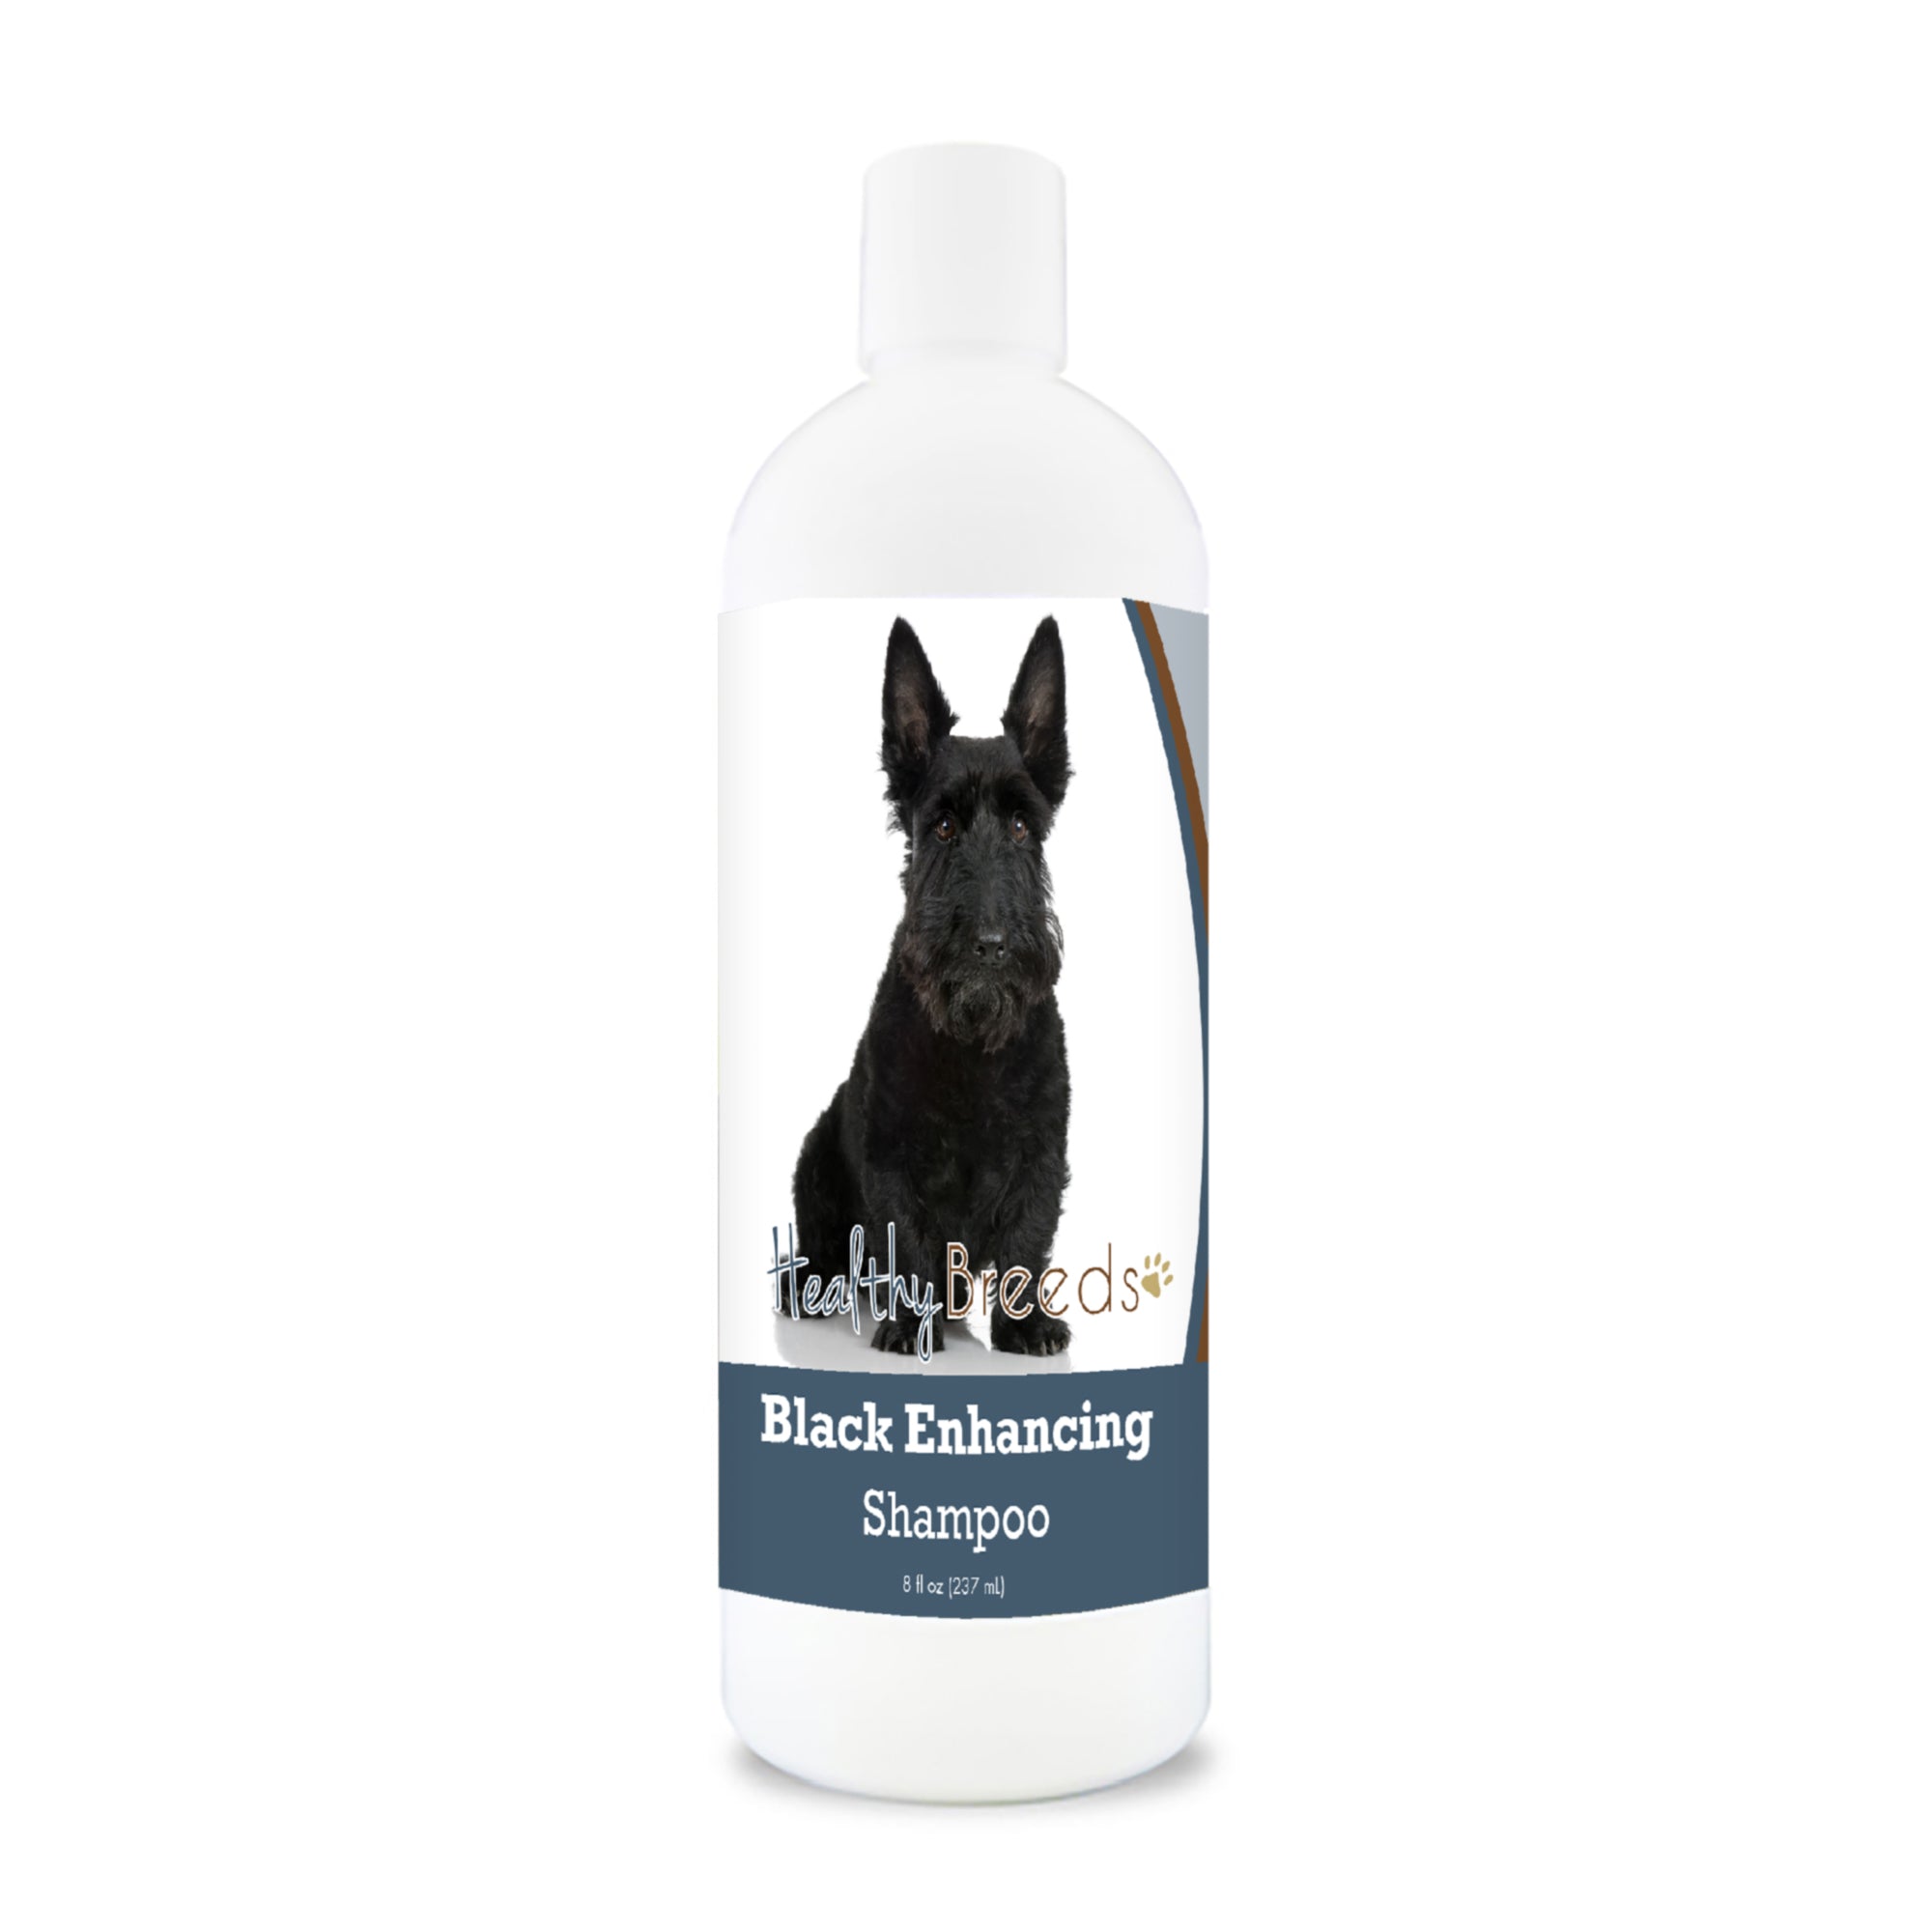 Scottish Terrier Black Enhancing Shampoo 8 oz